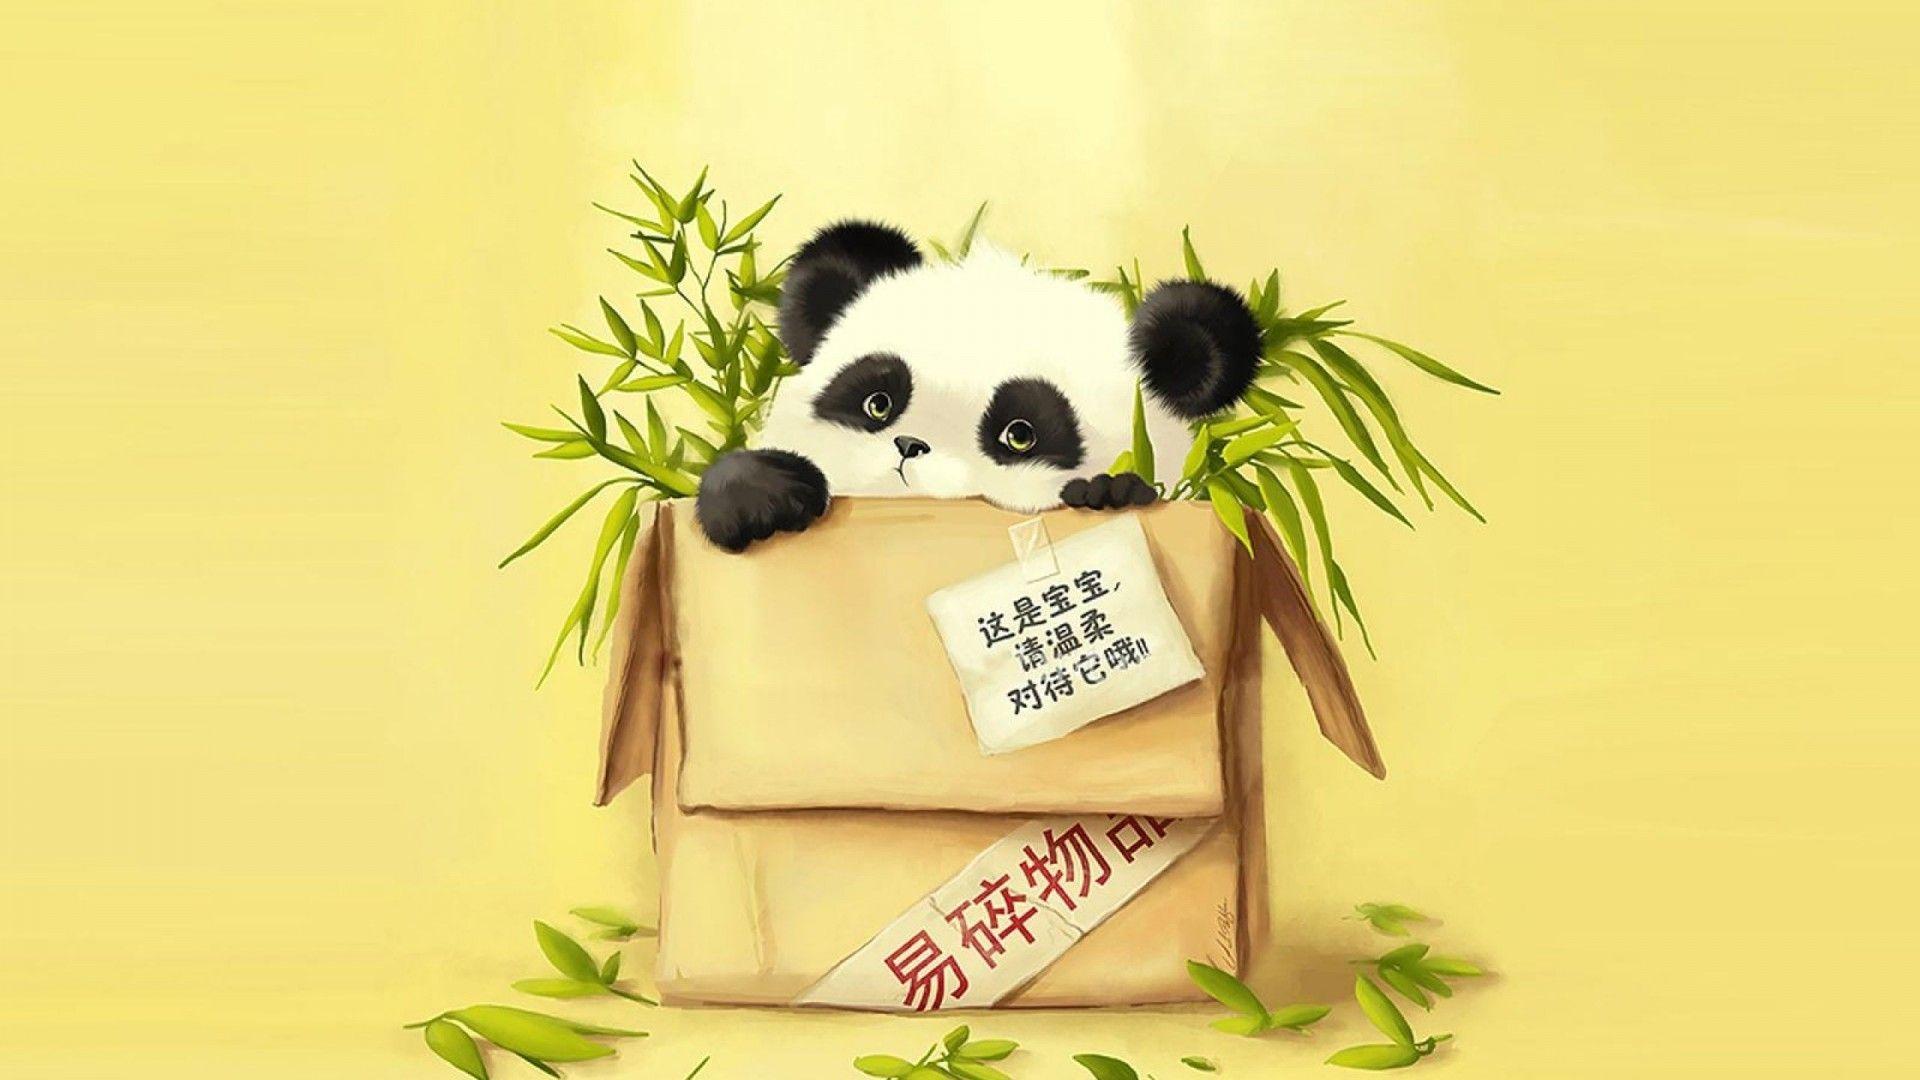 Cute Panda Drawing Tumblr.com. Free for personal use